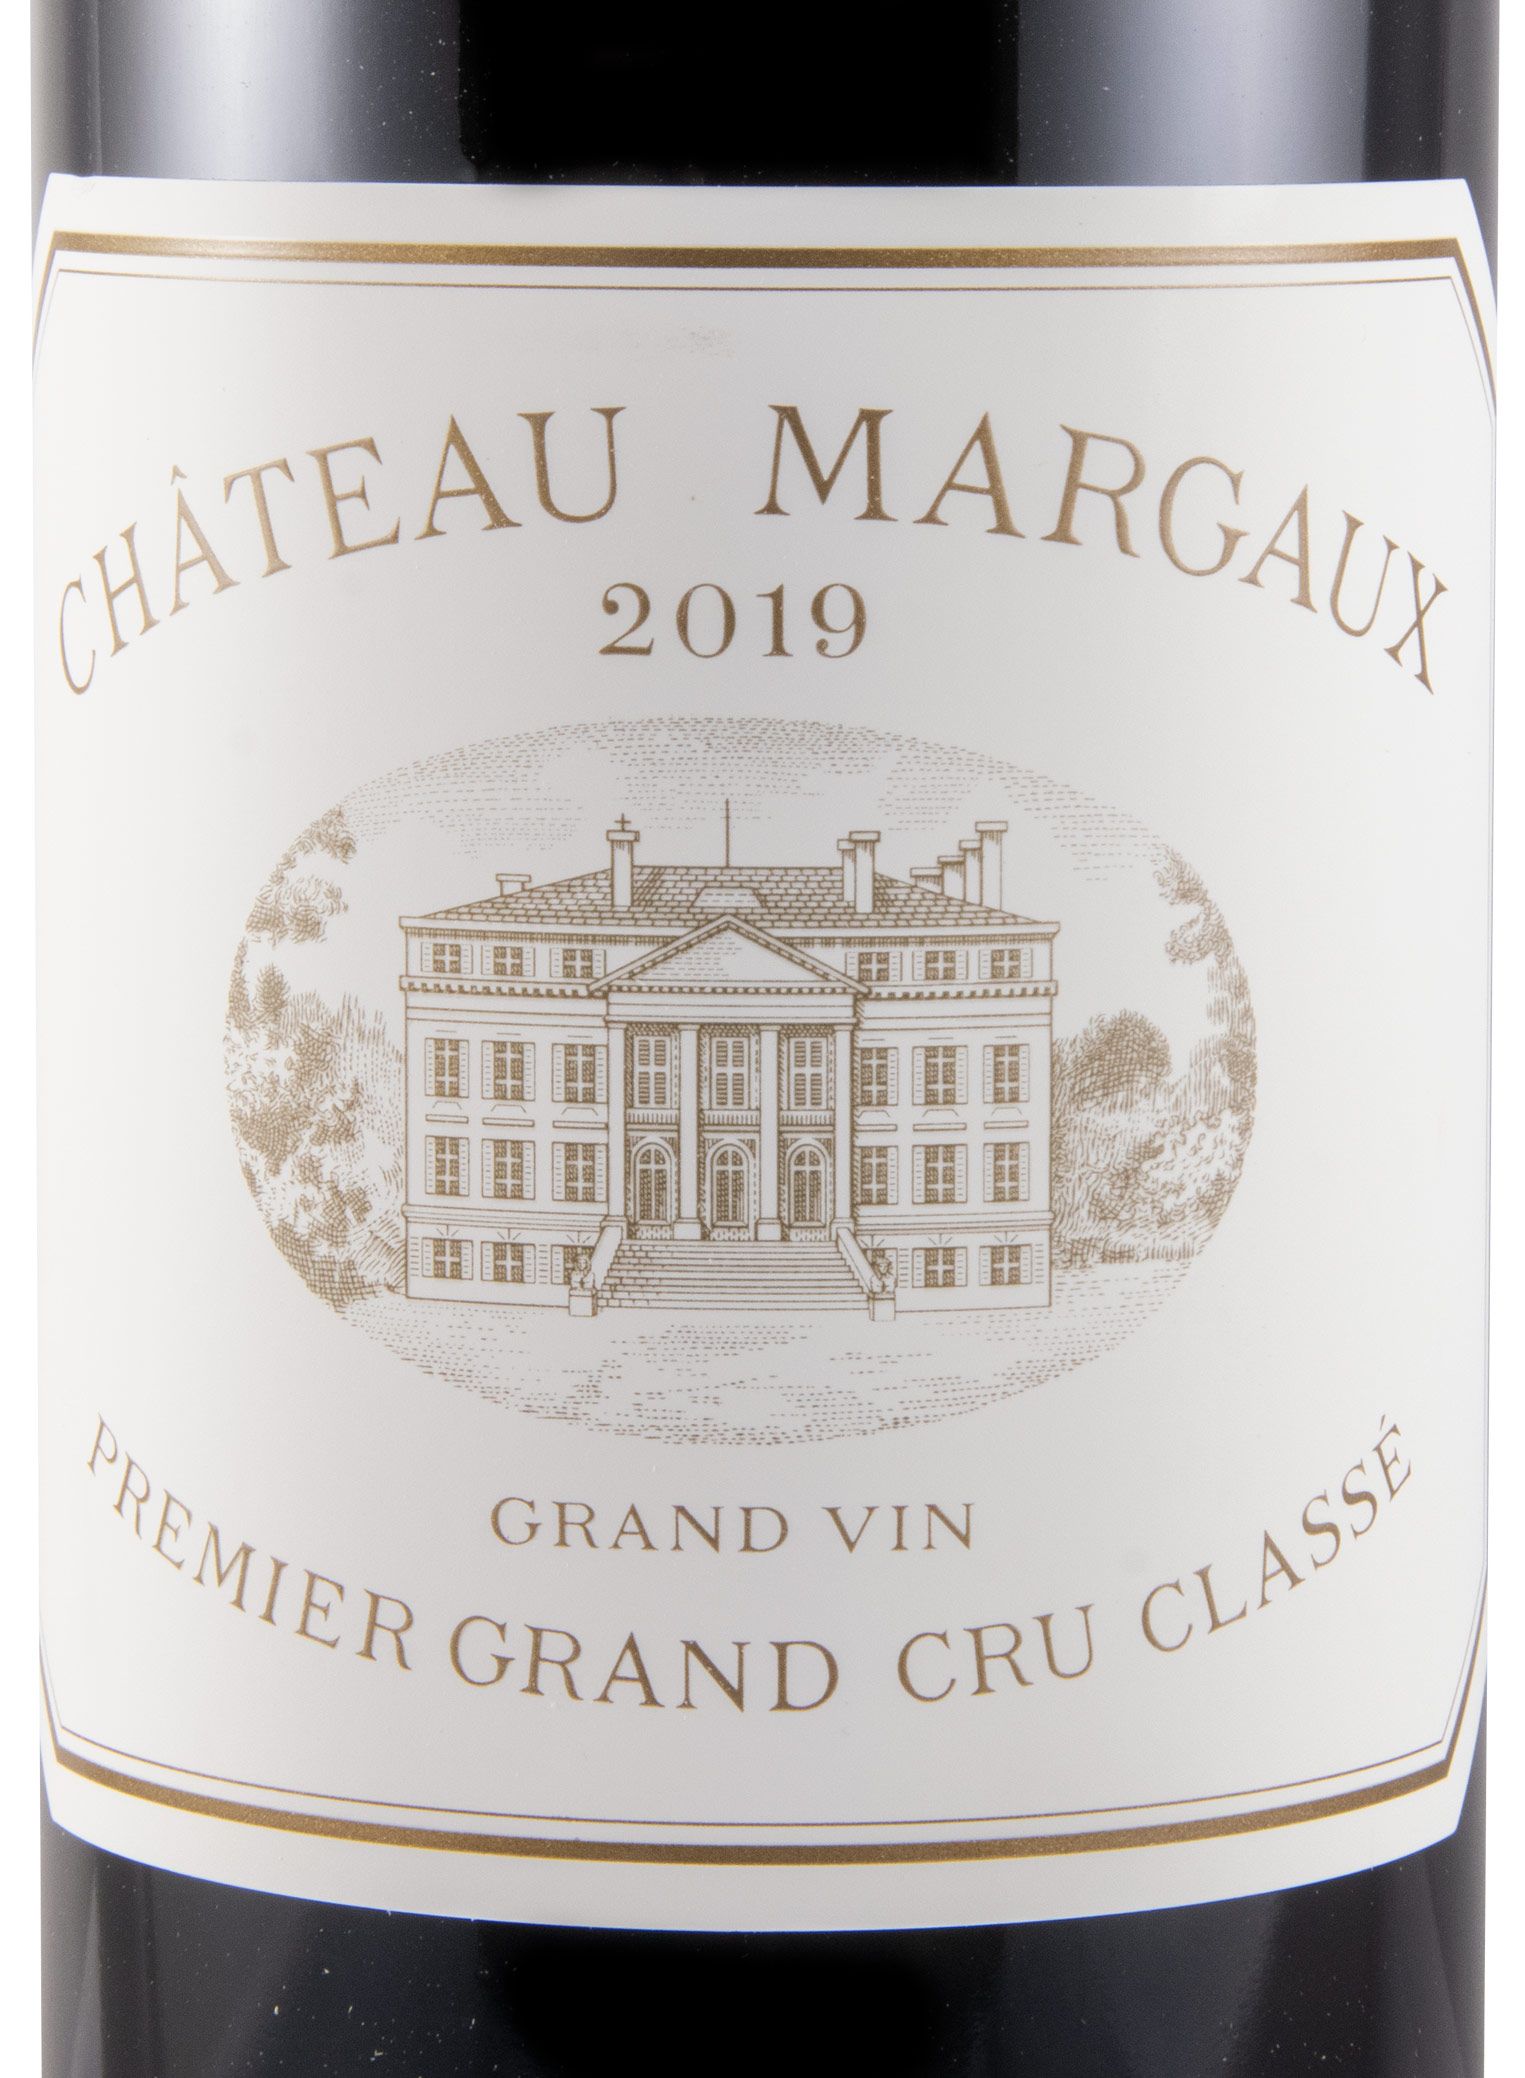 2019 Château Margaux tinto